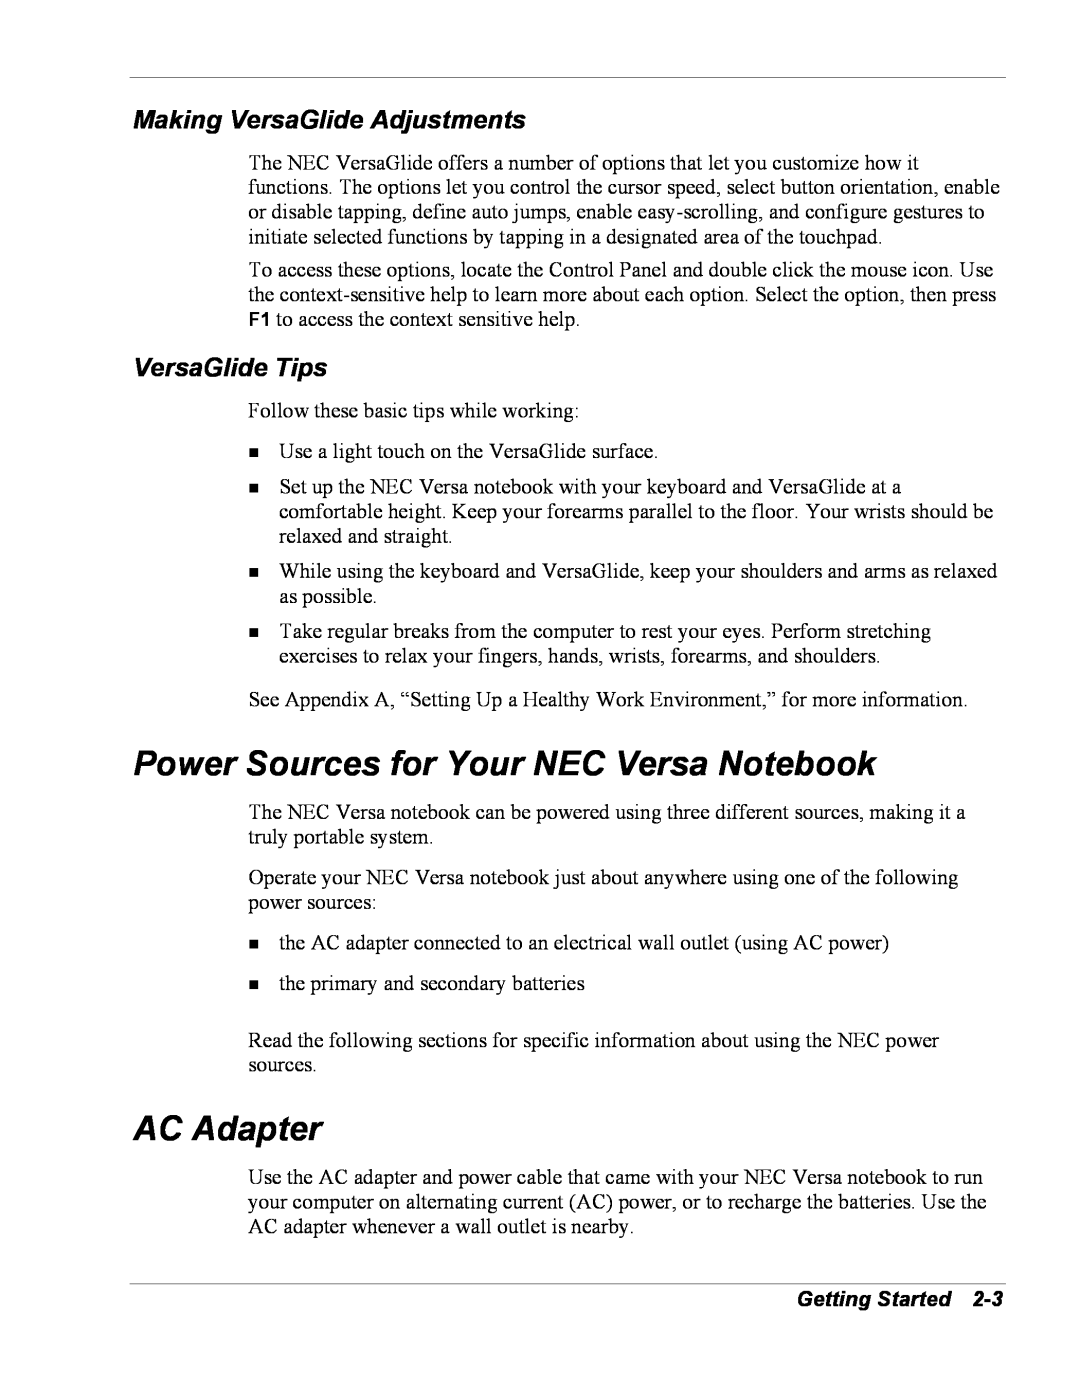 NEC Versa Series Power Sources for Your NEC Versa Notebook, AC Adapter, Making VersaGlide Adjustments, VersaGlide Tips 